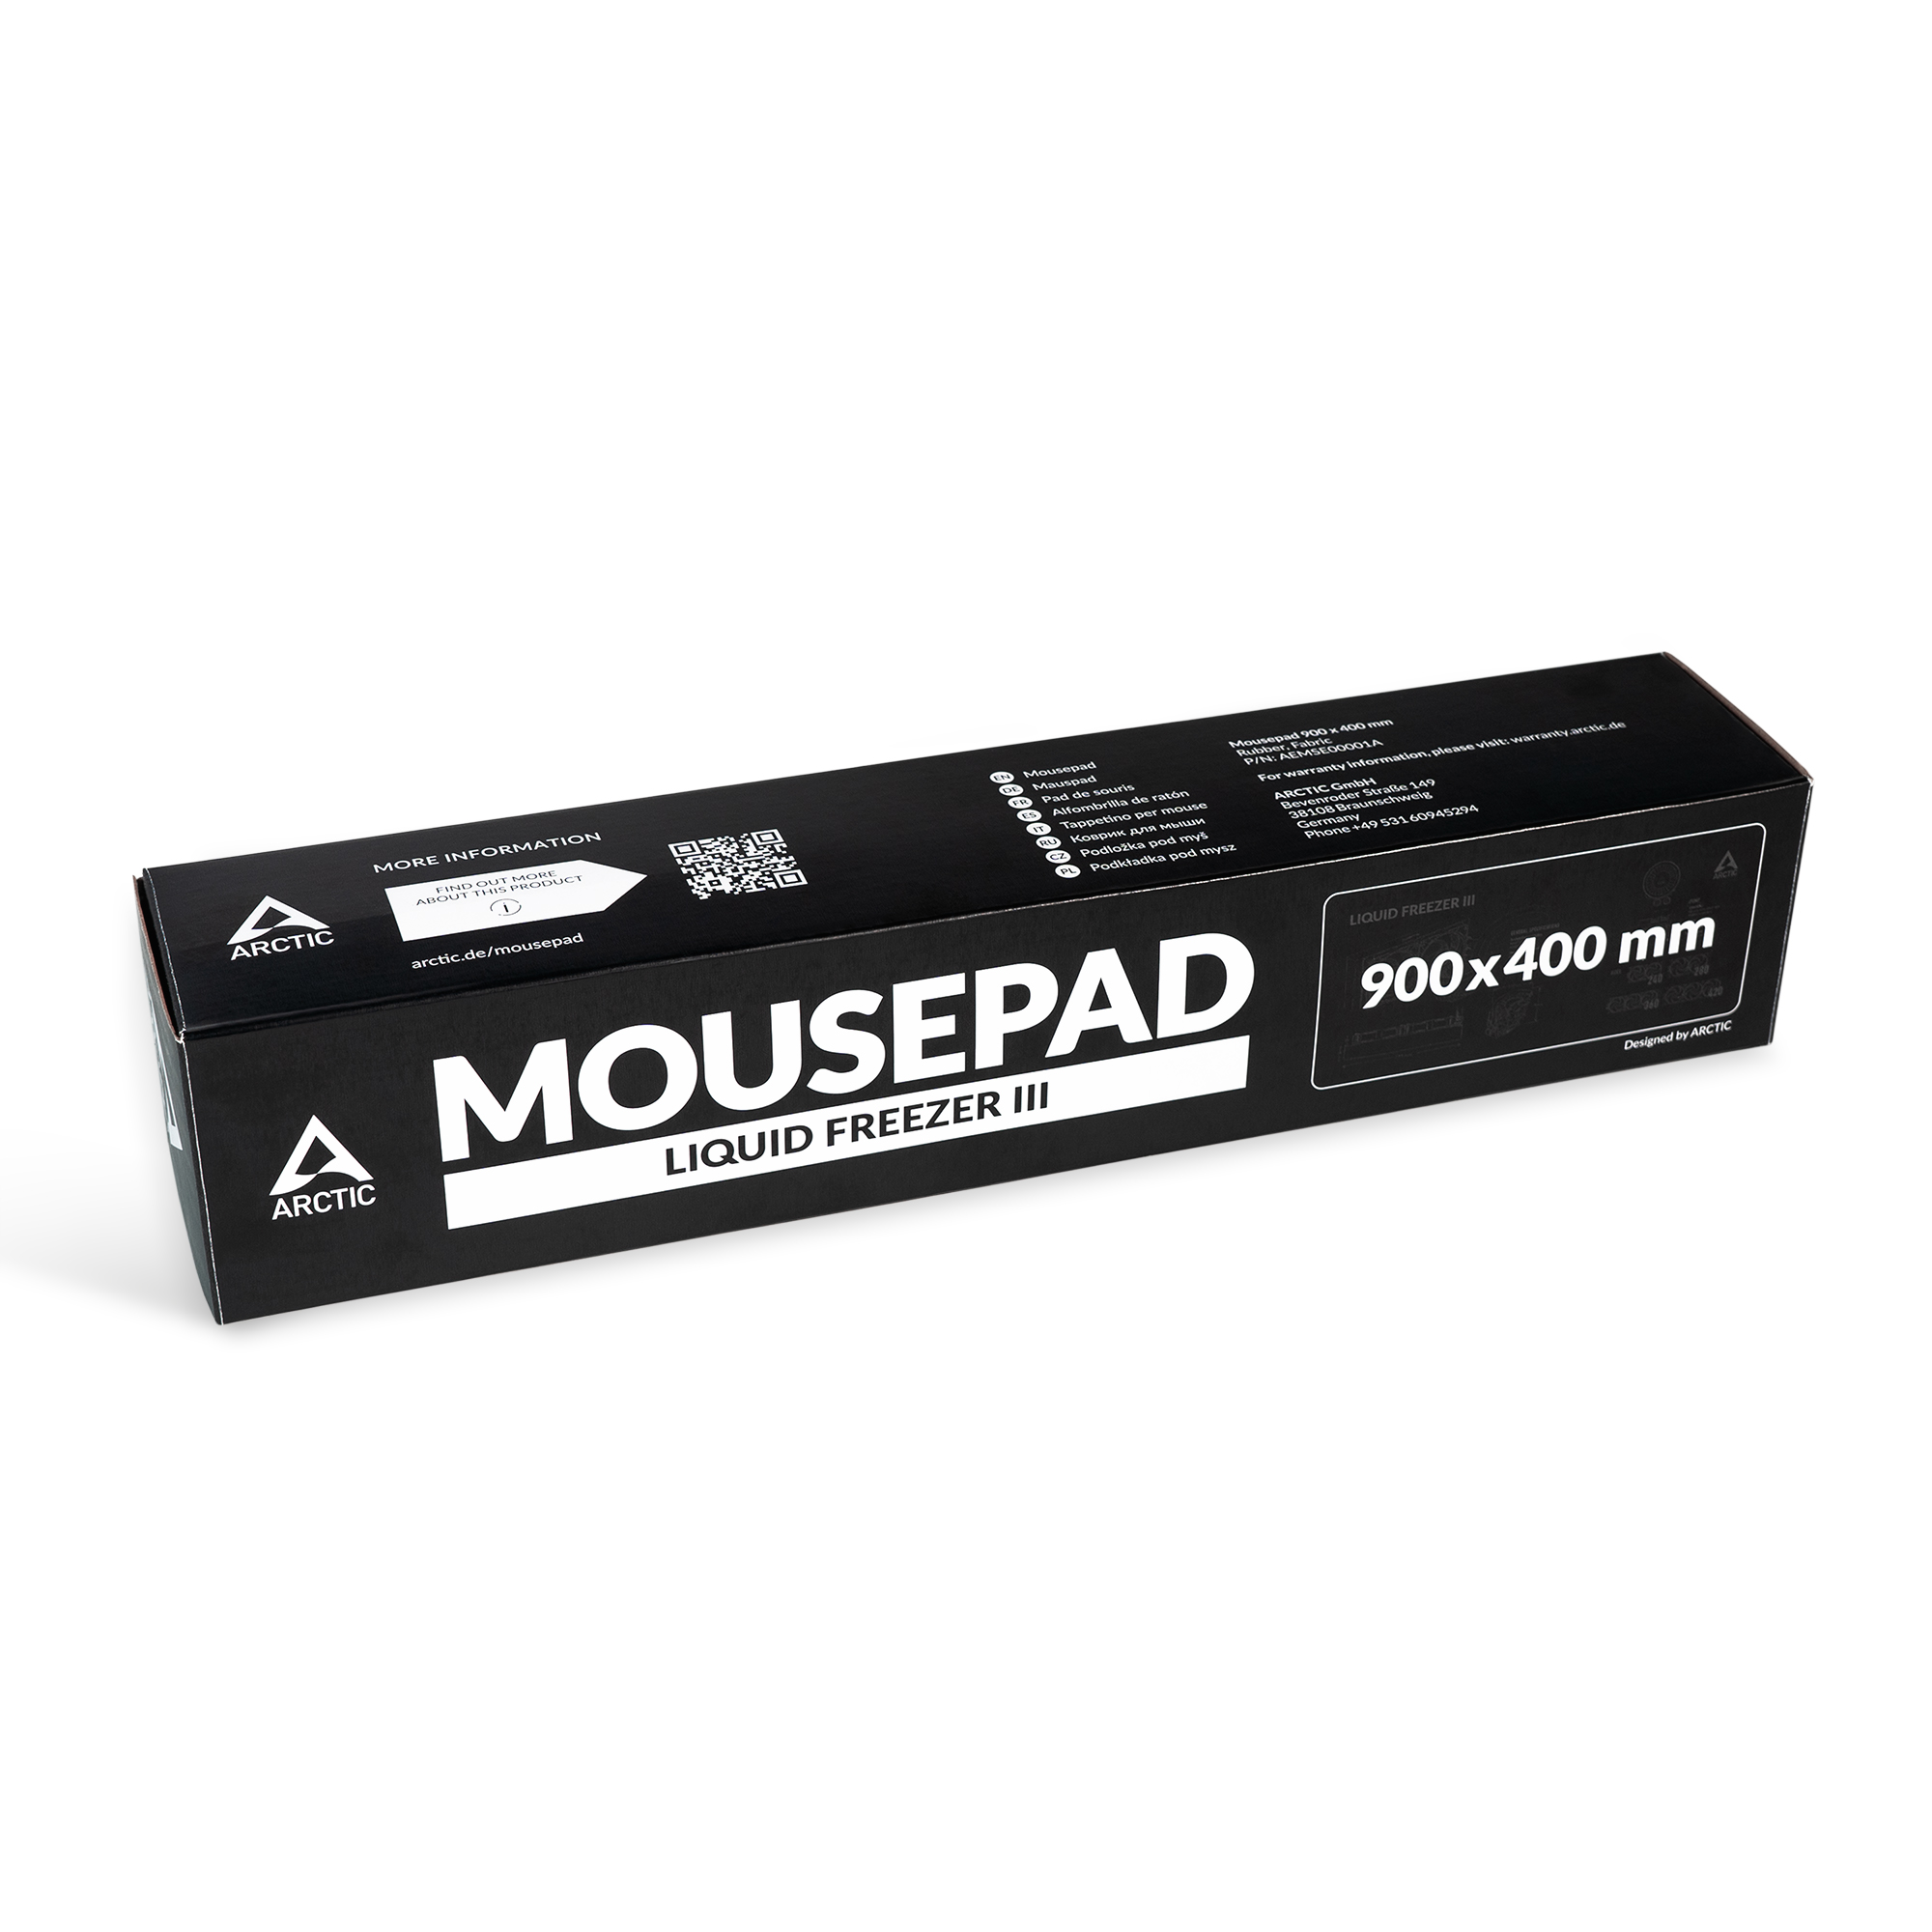 LFIII_mousepad_packaging_horizontal_2000x2000